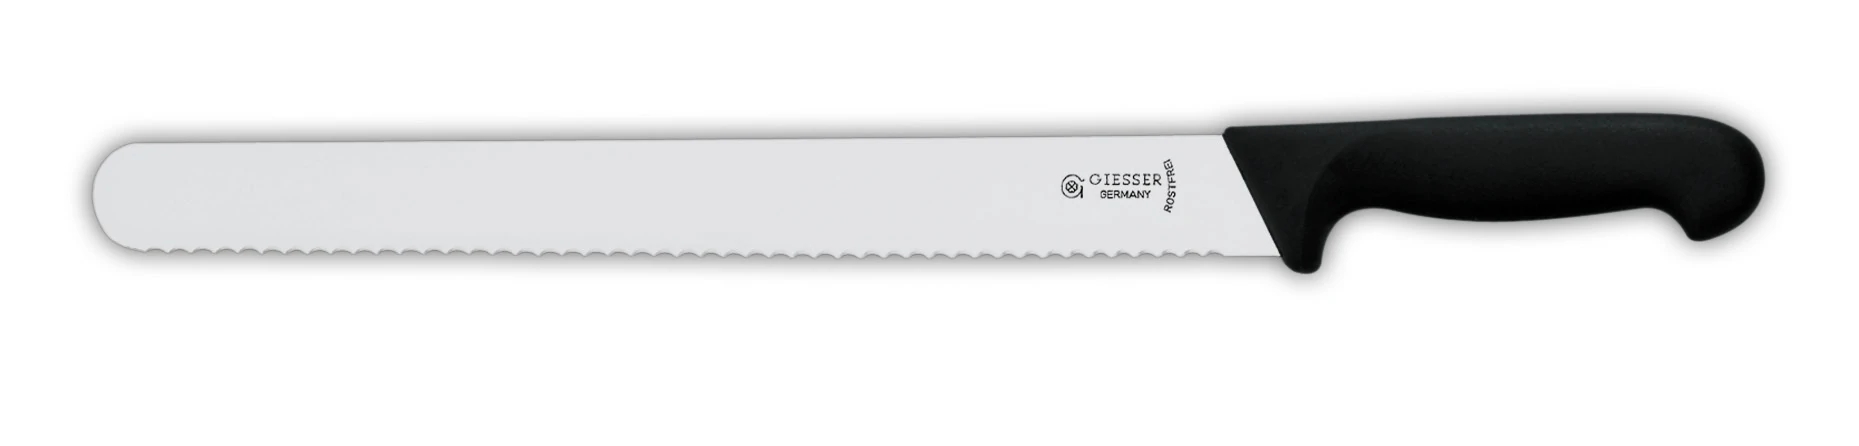 Giesser Slicing Knife 12 1/4" Serrated